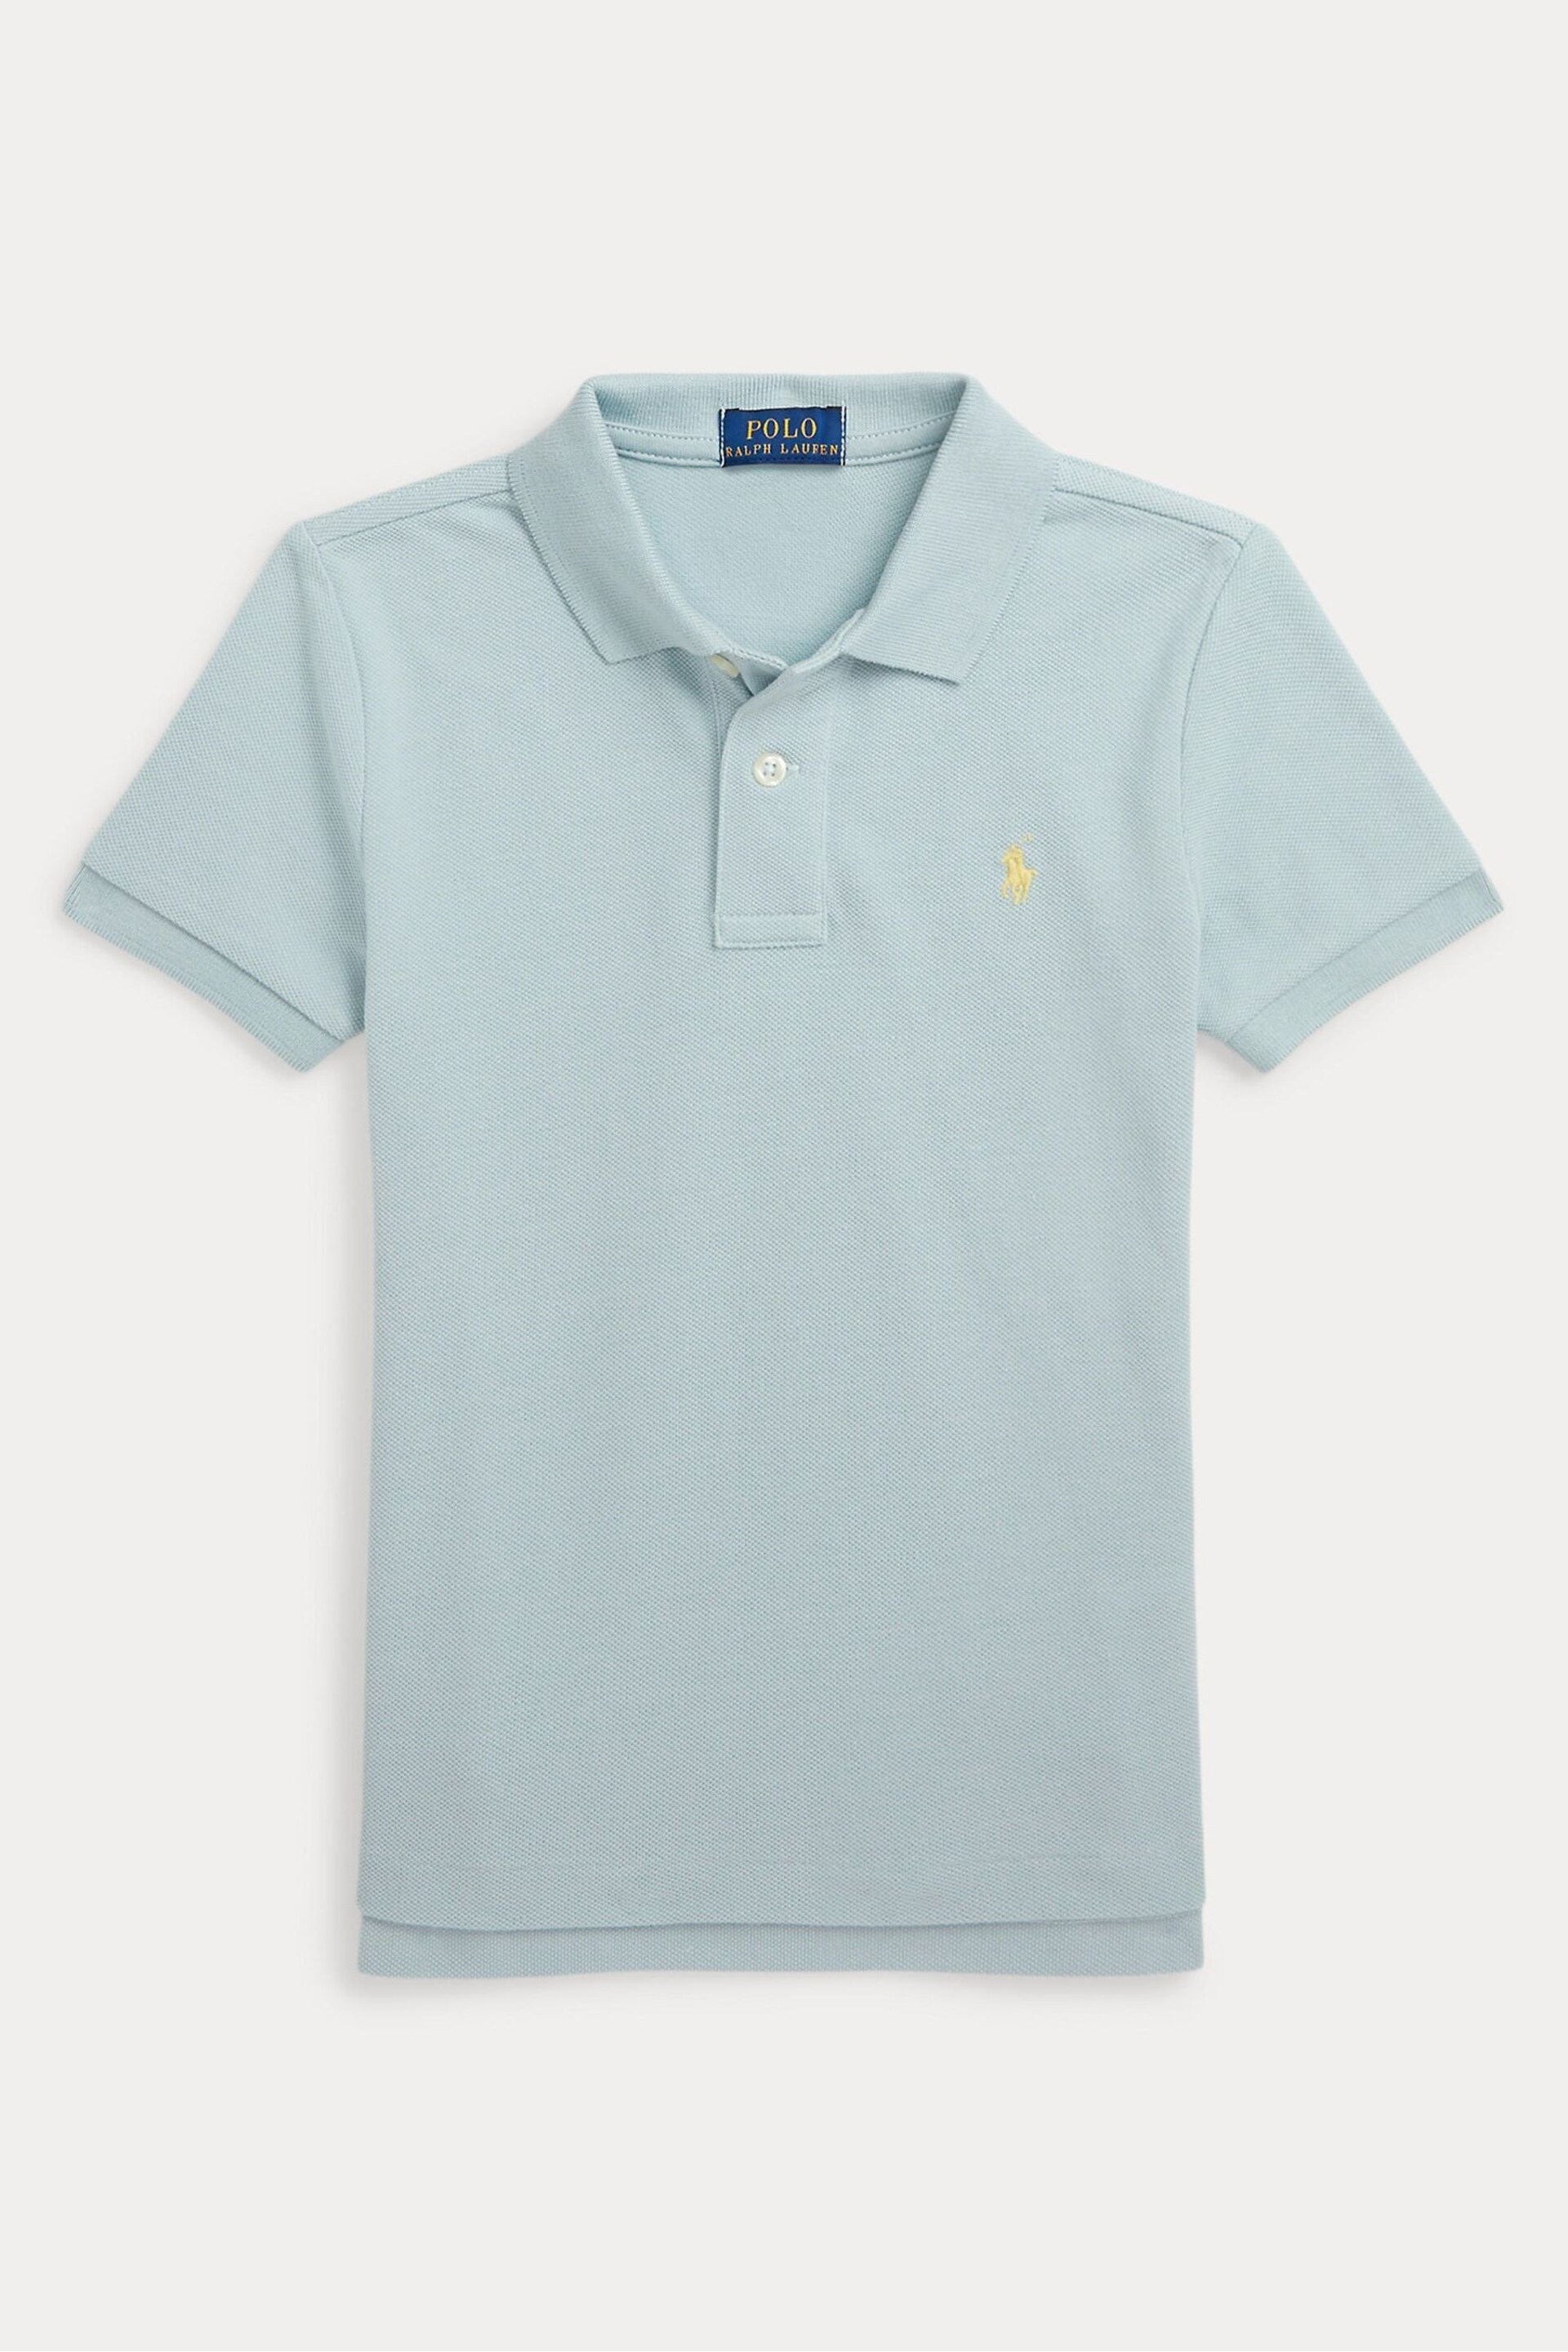 Polo Ralph Lauren Boys Iconic Polo Shirt - Image 1 of 4